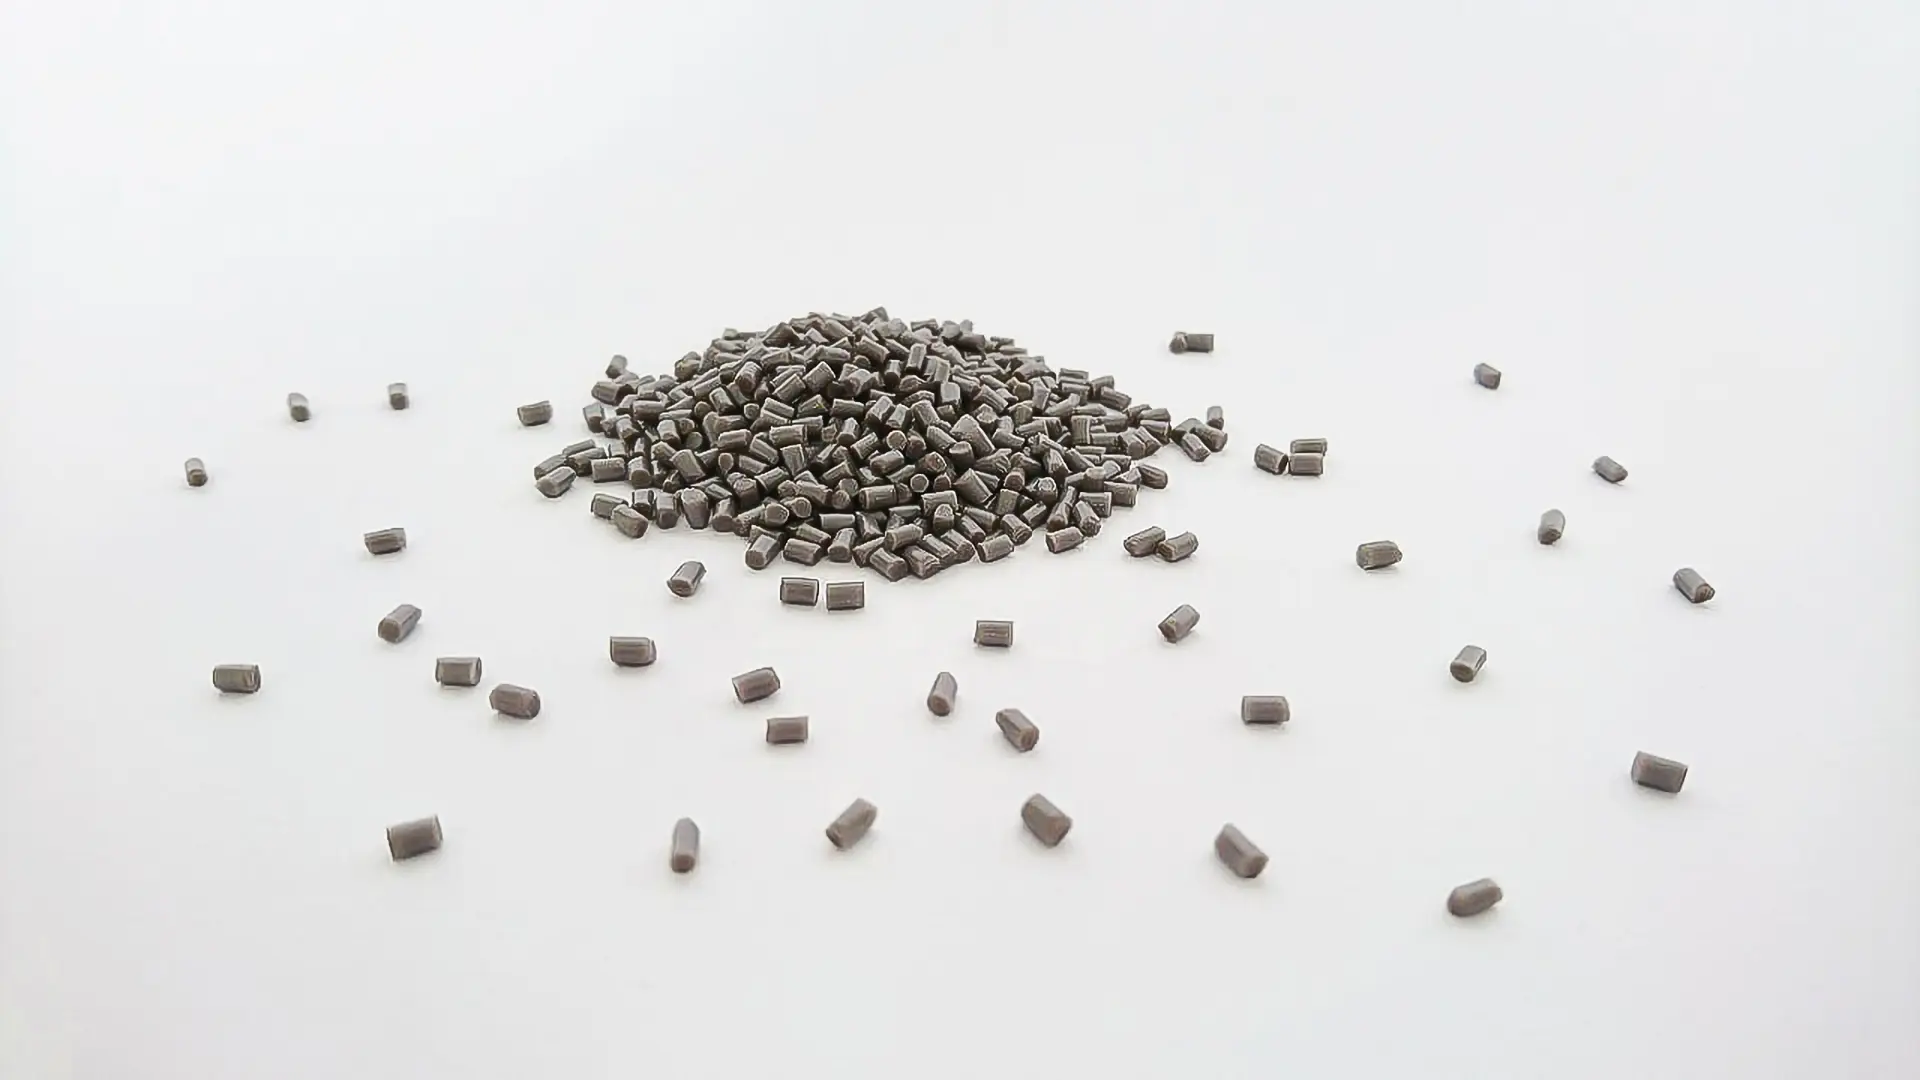 CoPEEK granules 002. BIEGLO GmbH